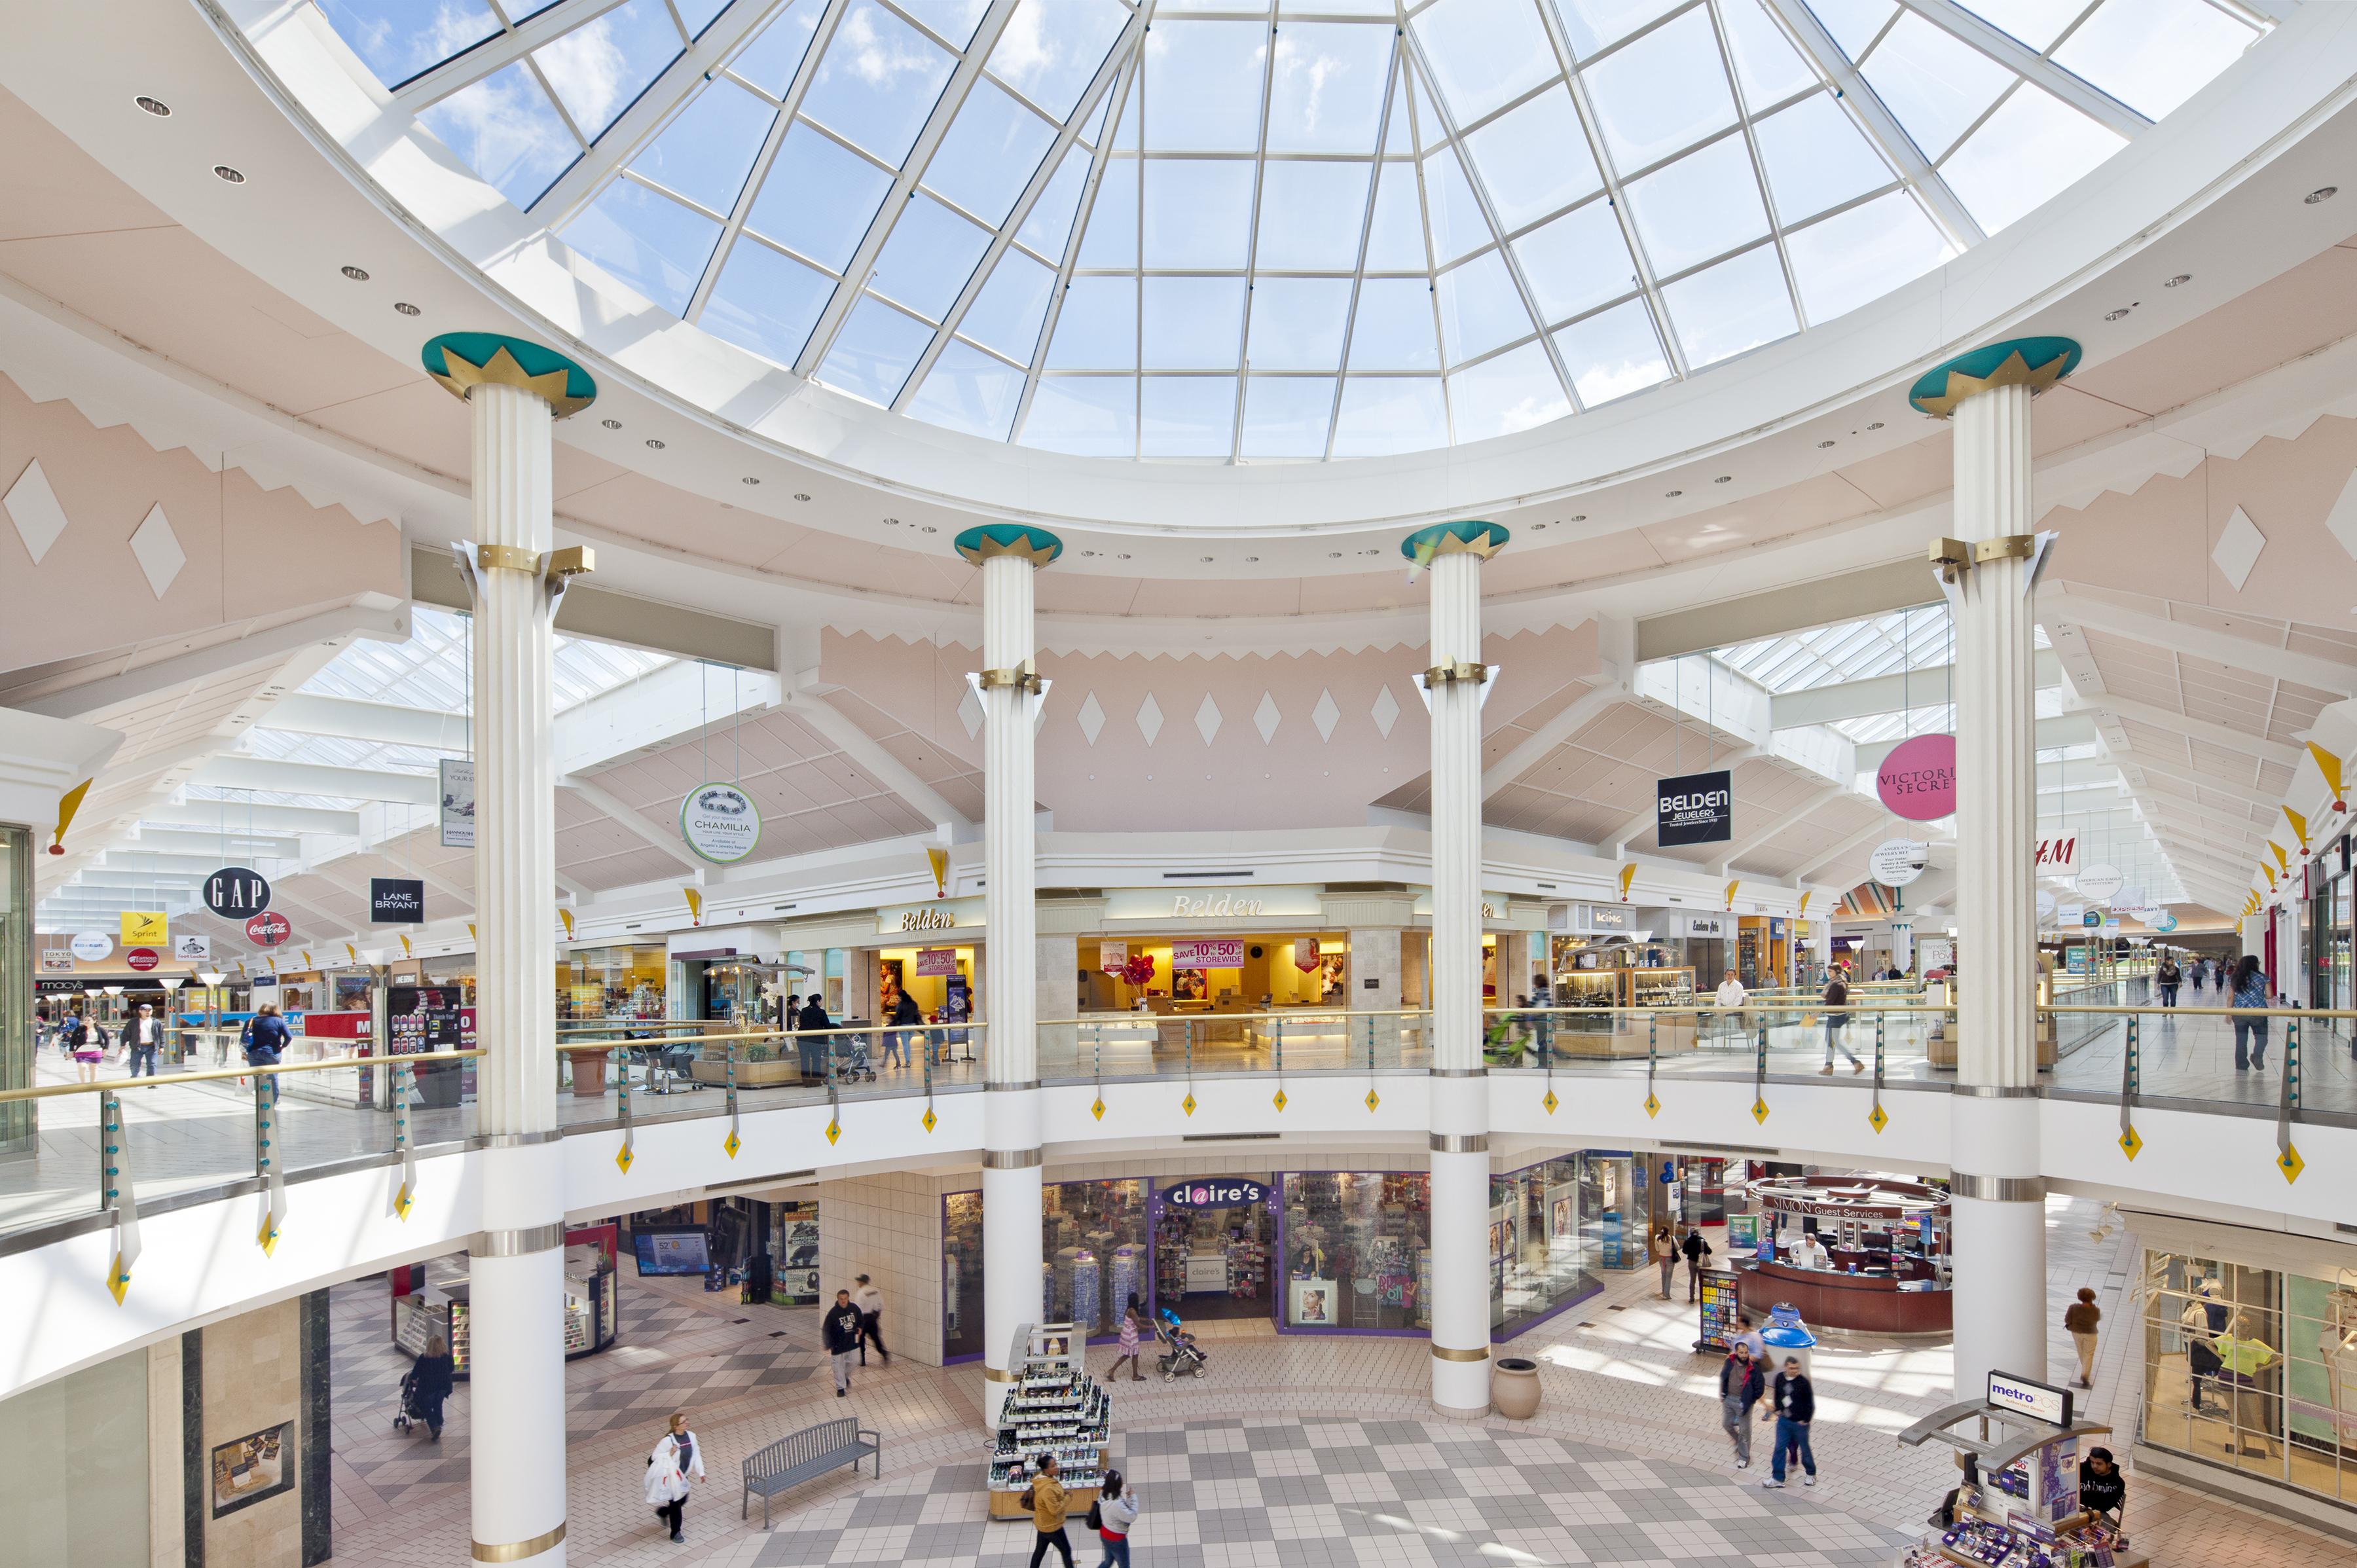 Descriptive essay on a busy shopping mall